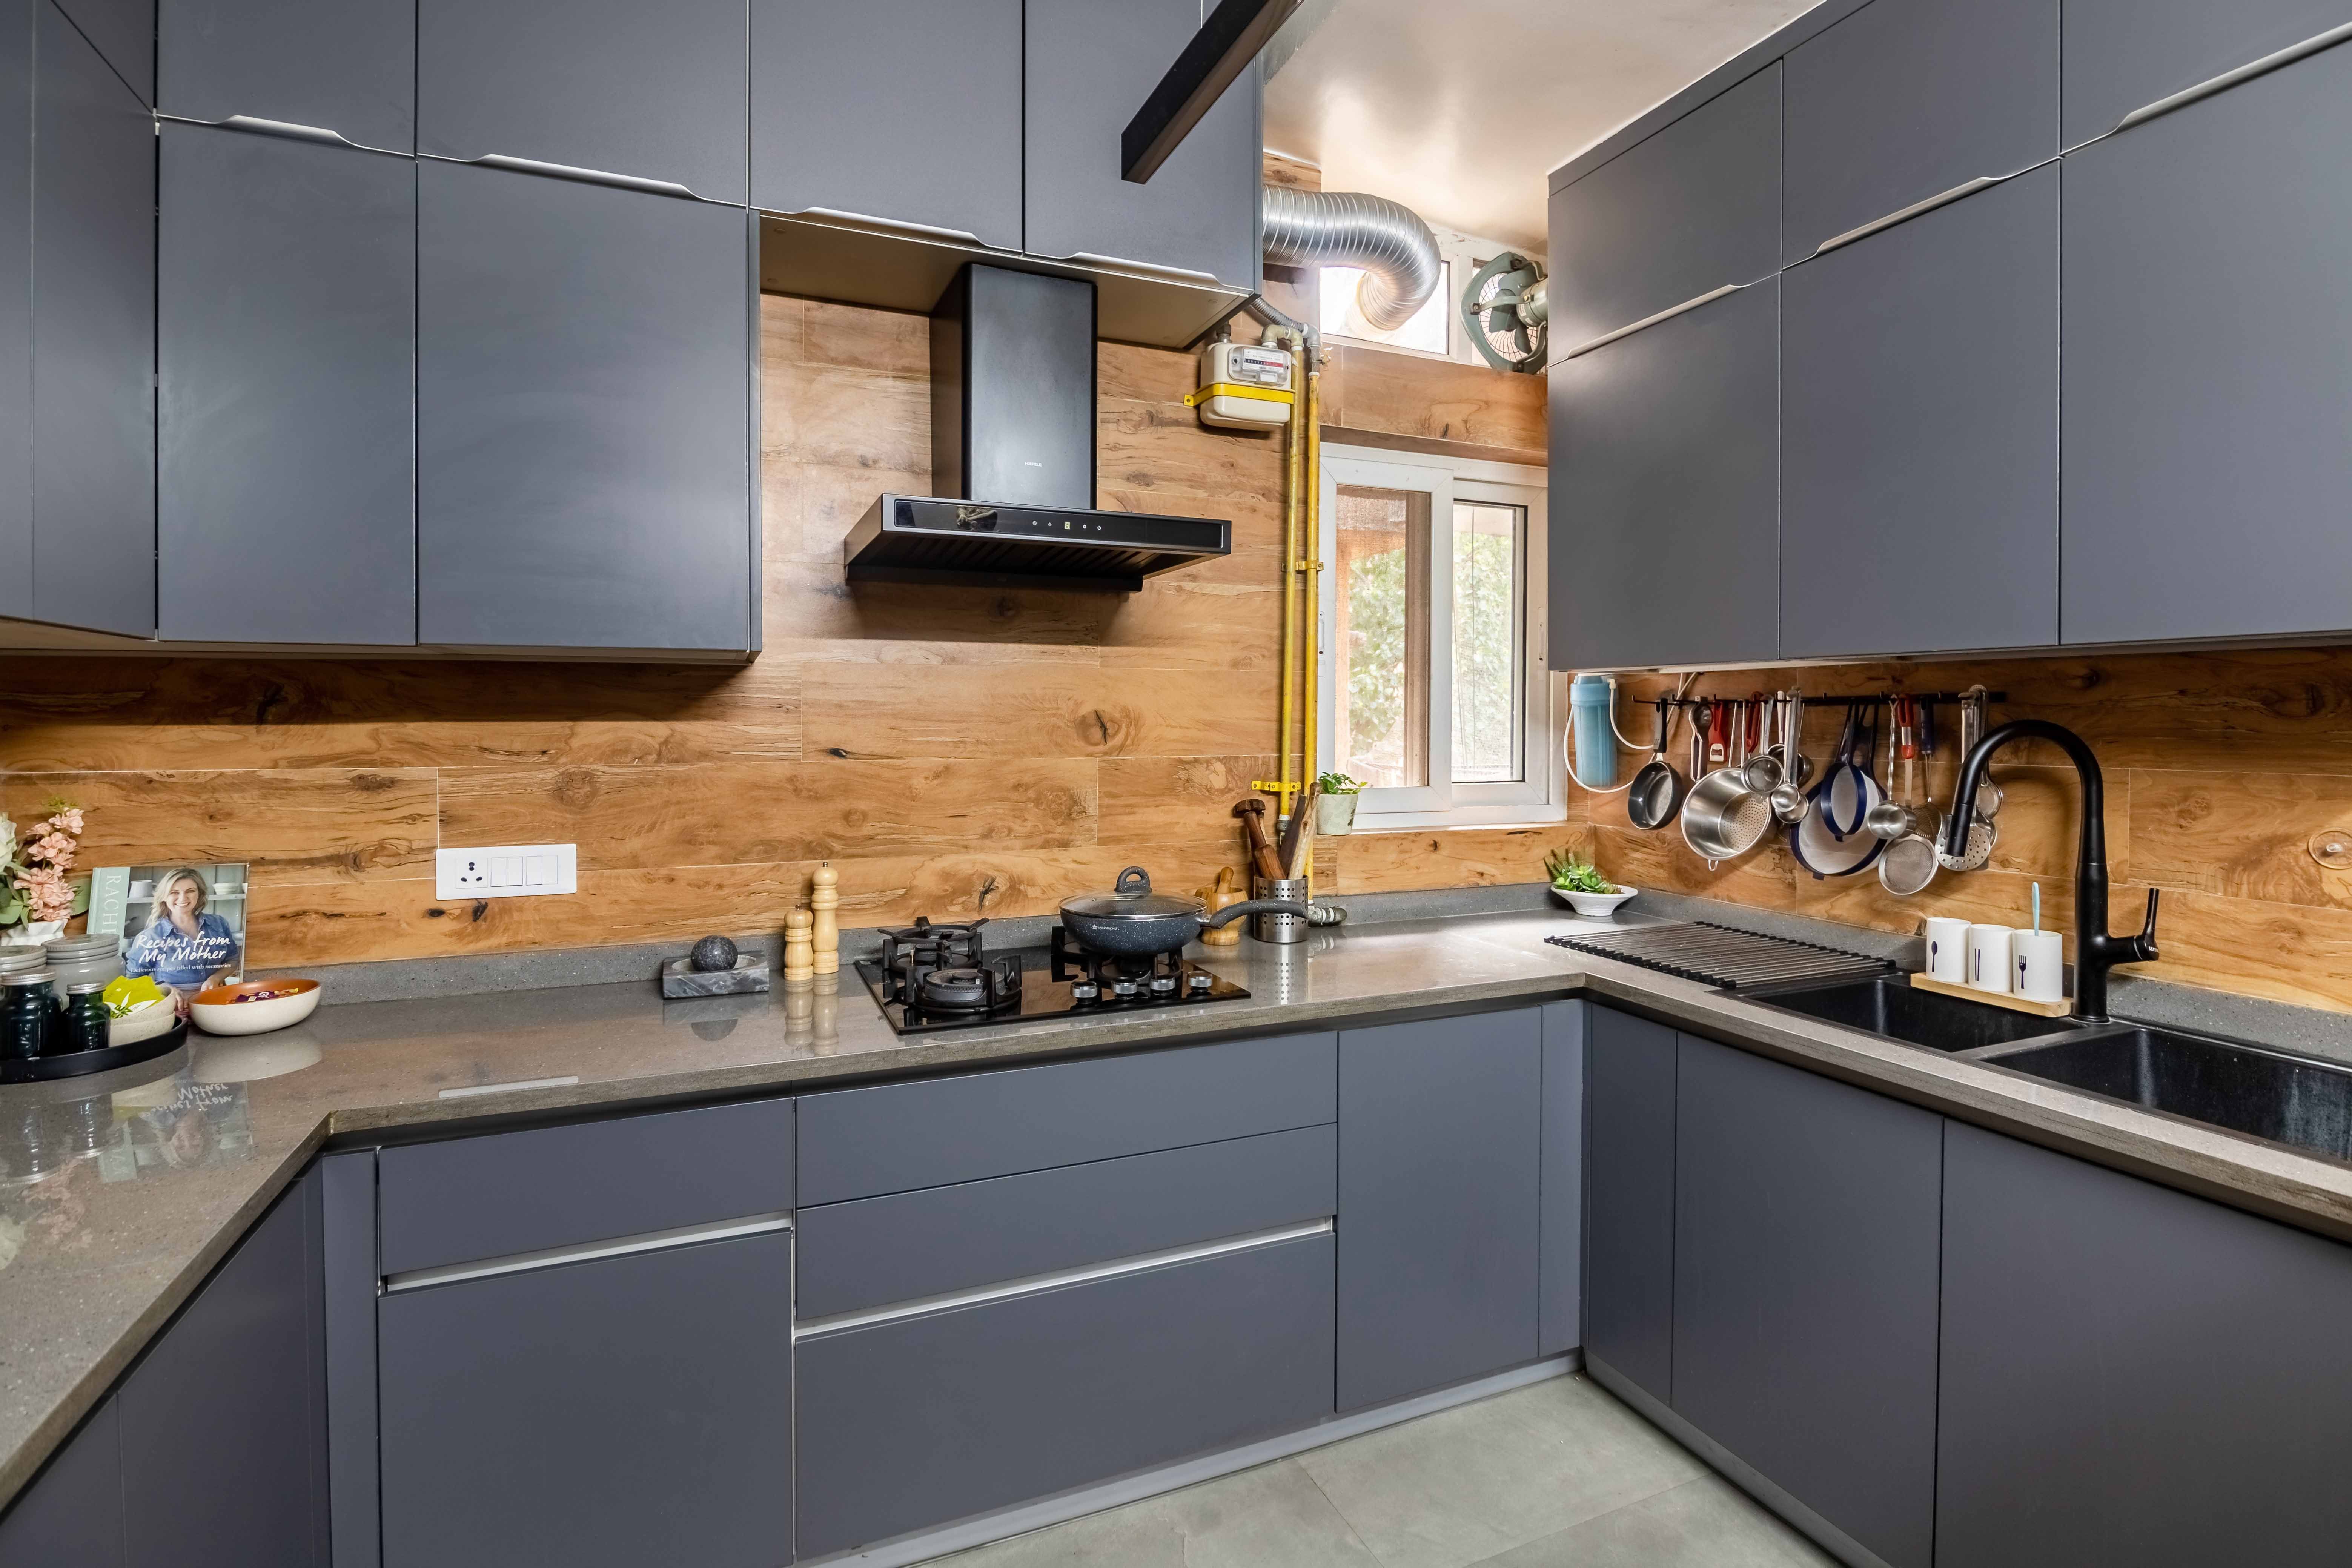 Modern U-Shaped Modular Kitchen Cabinet Design With Dark Grey Cabinets